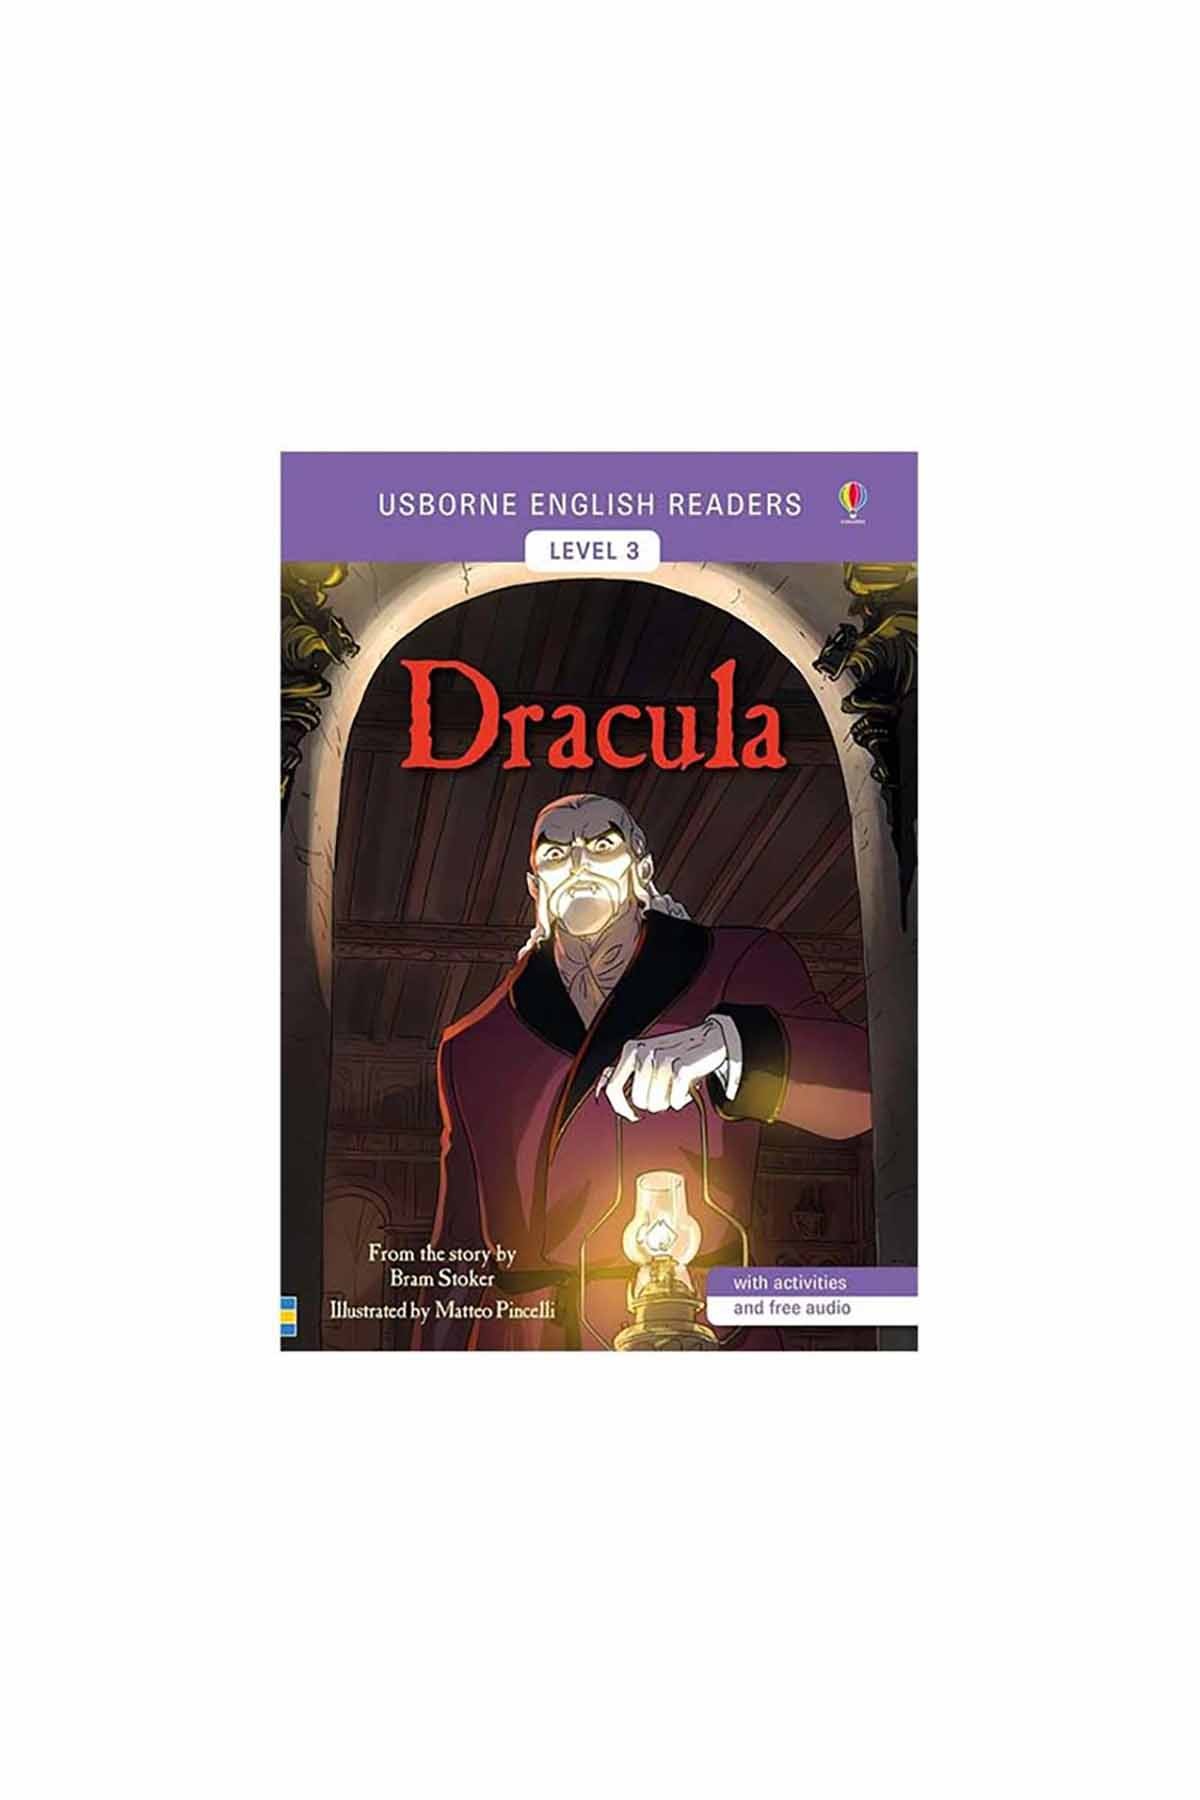 The Usborne Dracula